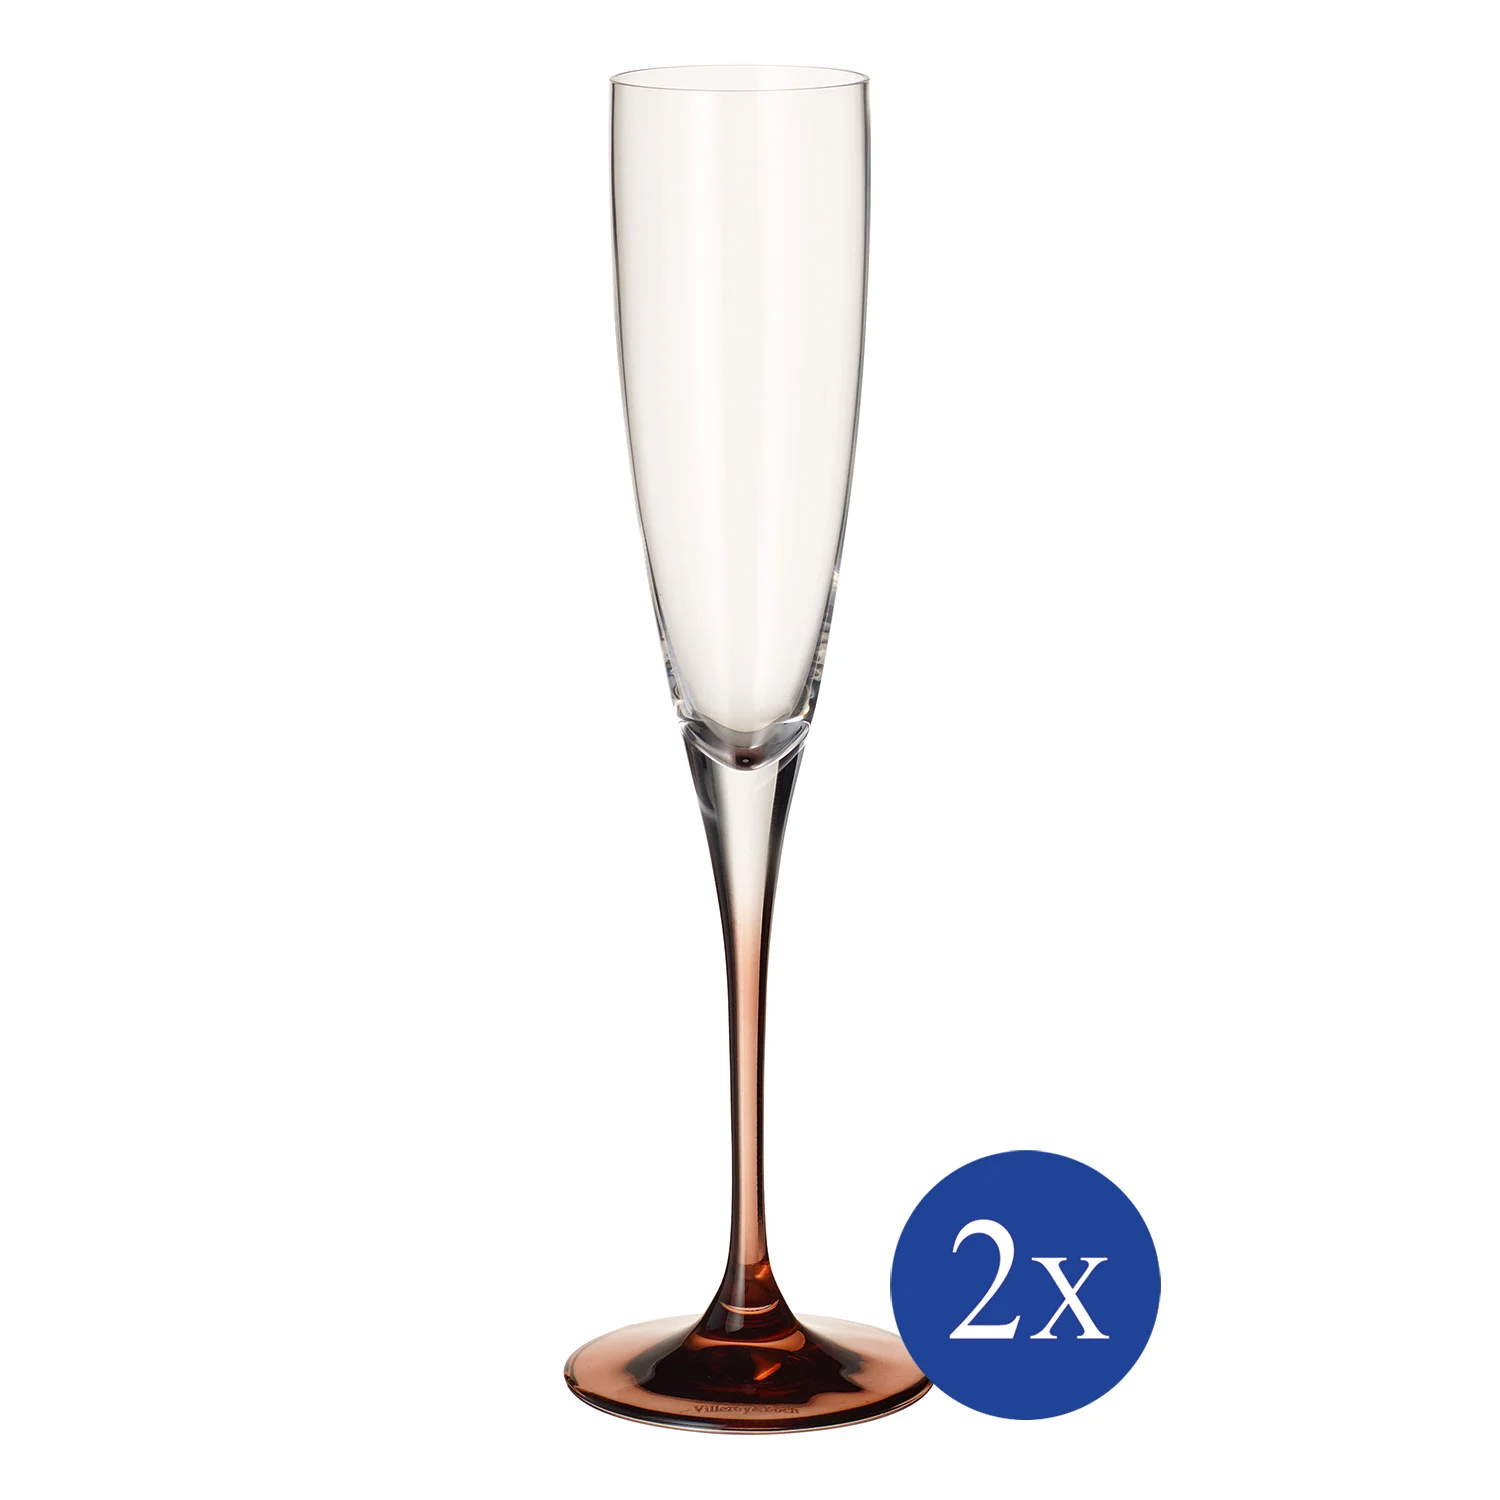 Manufacture Glass Набор бокалов для шампанского 150 мл, 2 шт.